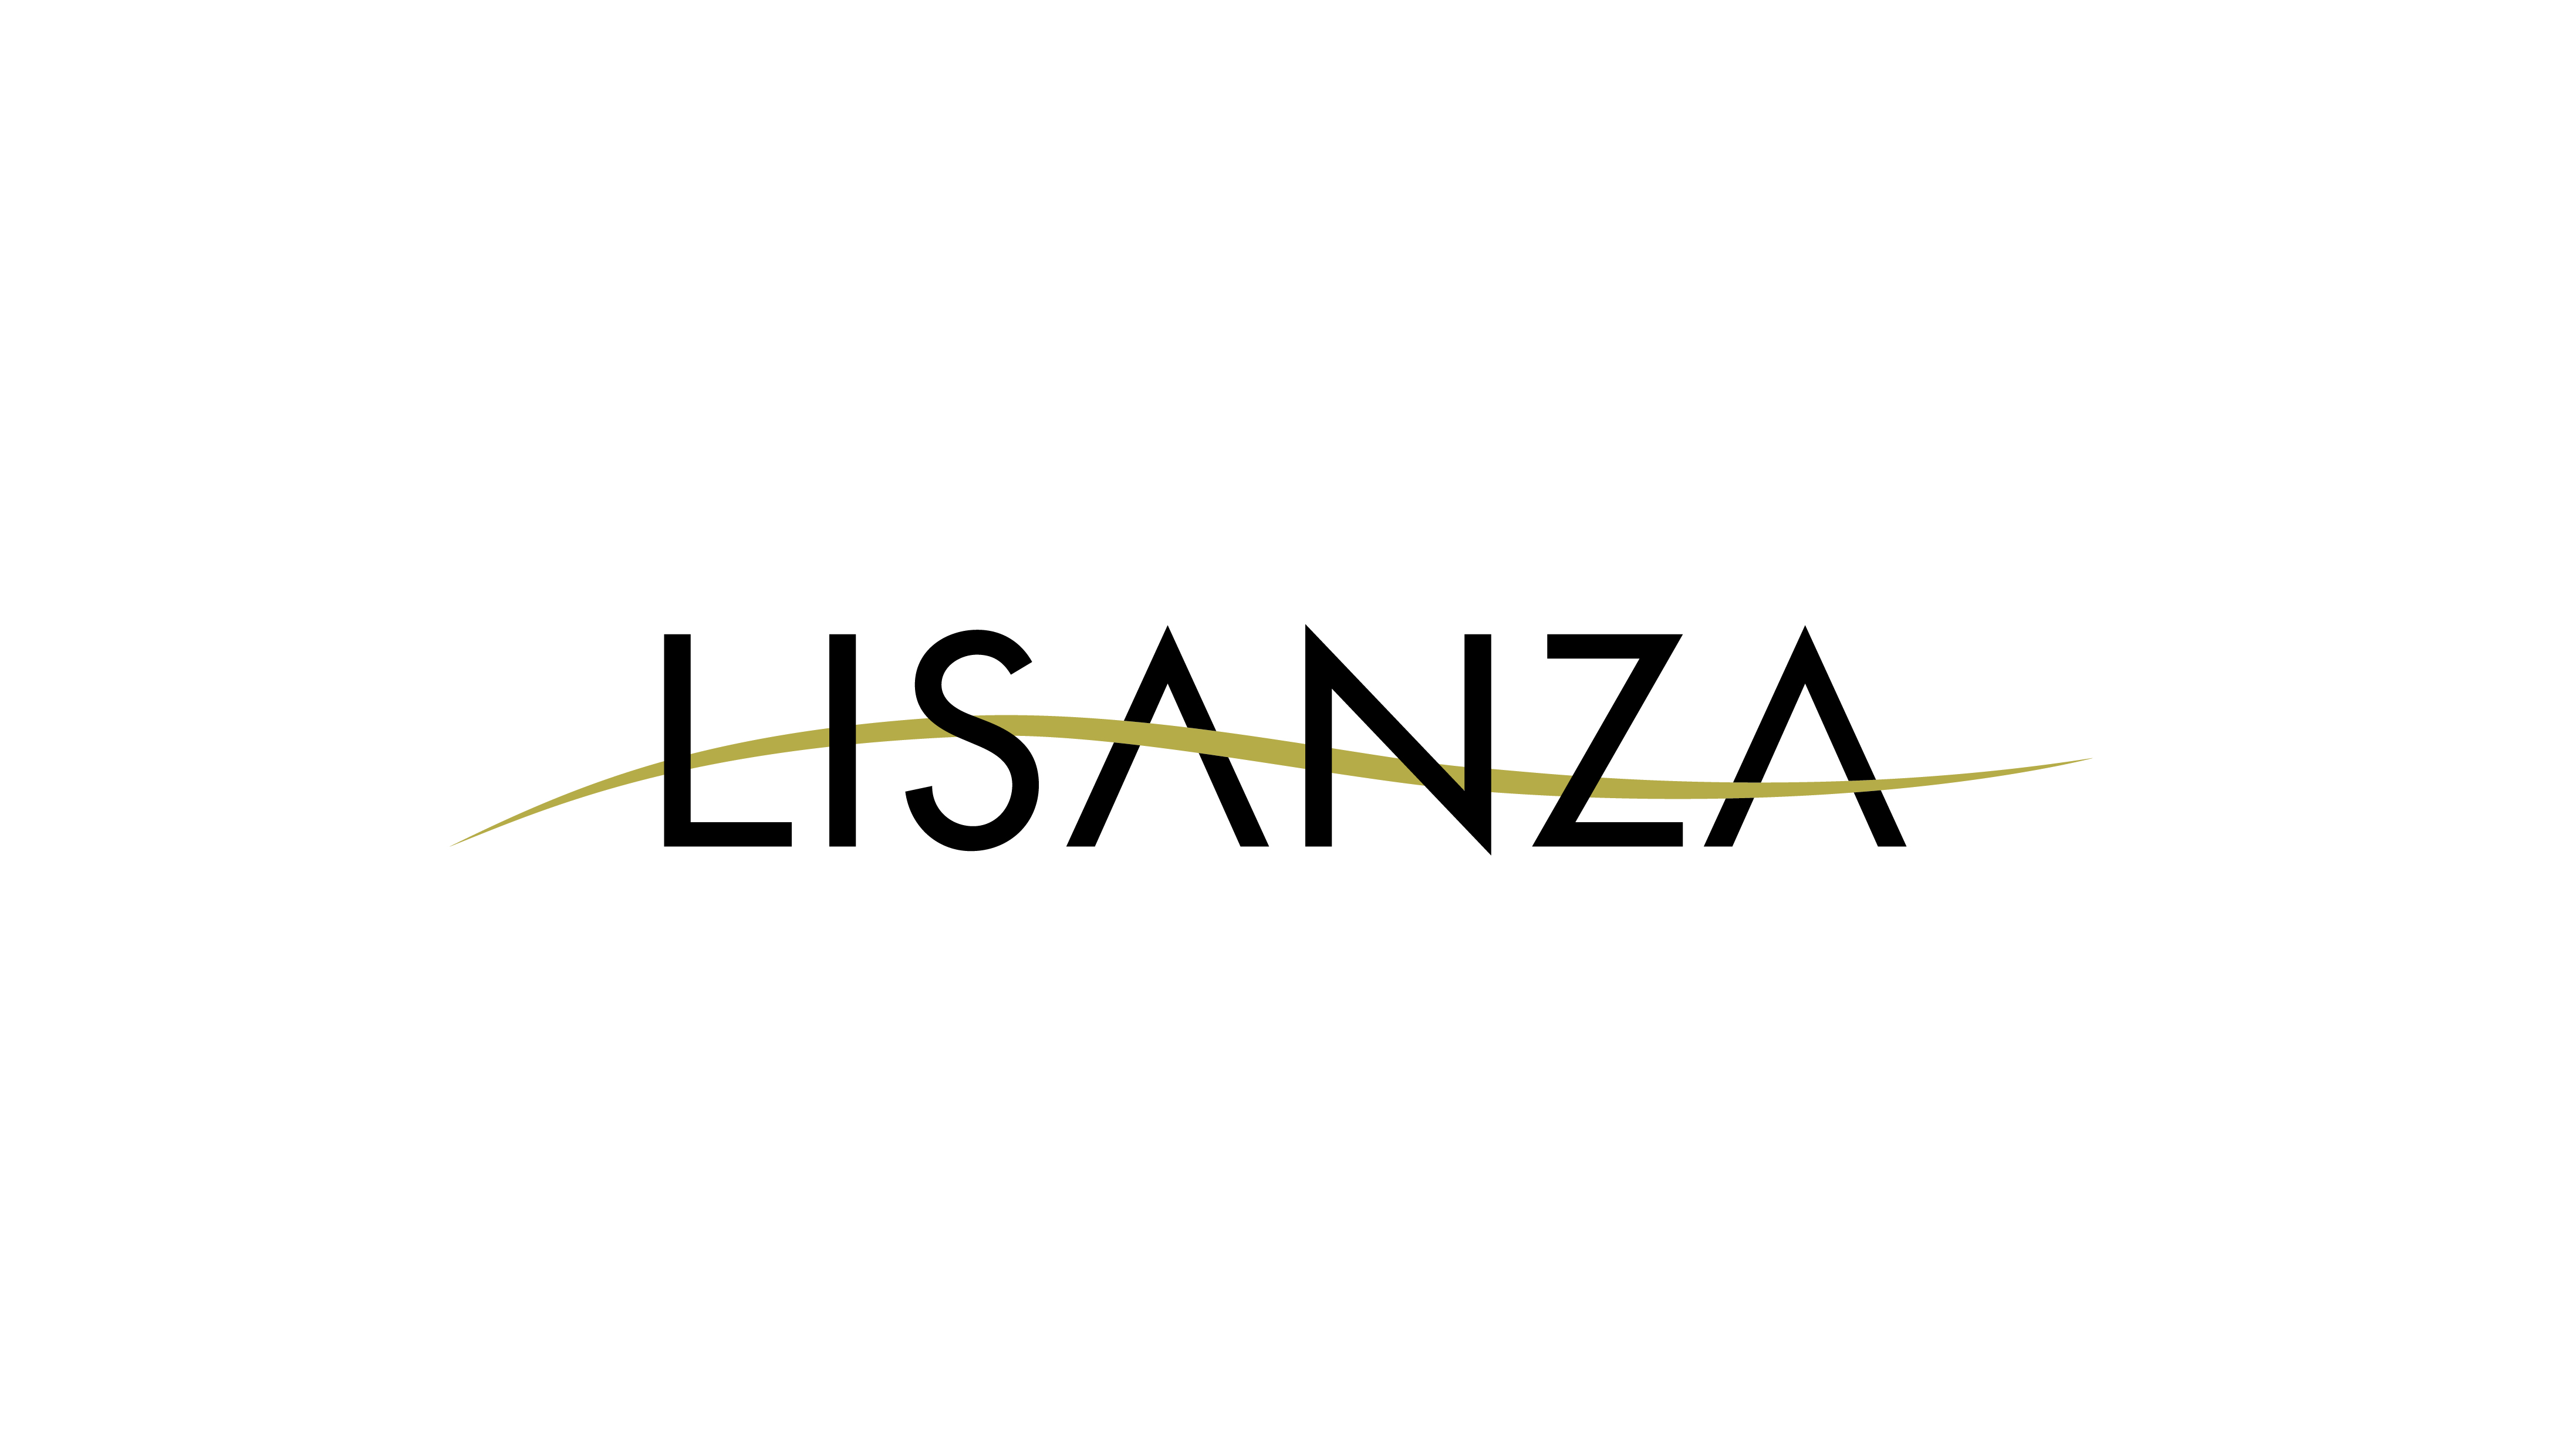 Lisanza logo